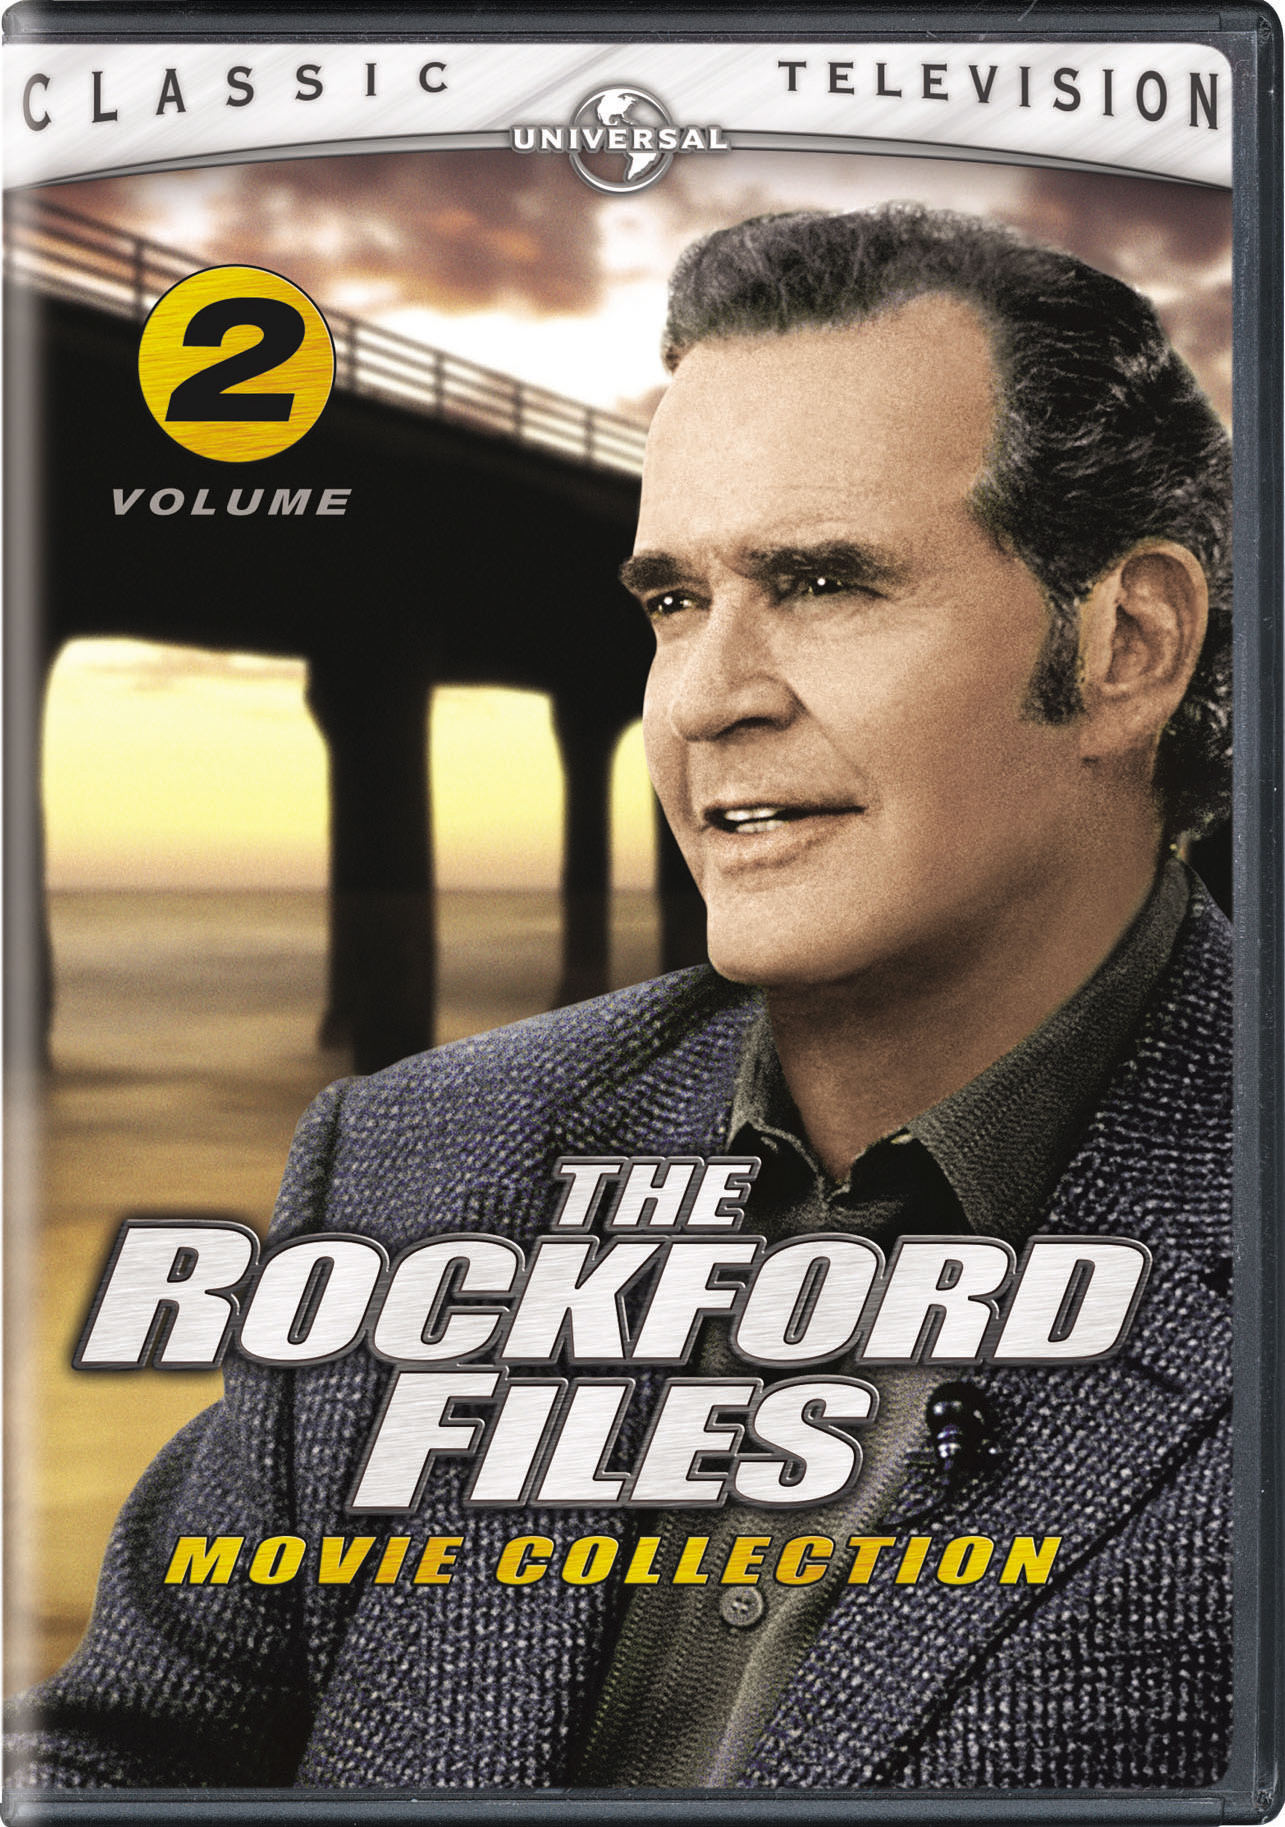 The Rockford Files: Movie Collection - Volume 2 - DVD [ 1994 ]  - Drama Movies On DVD - Movies On GRUV